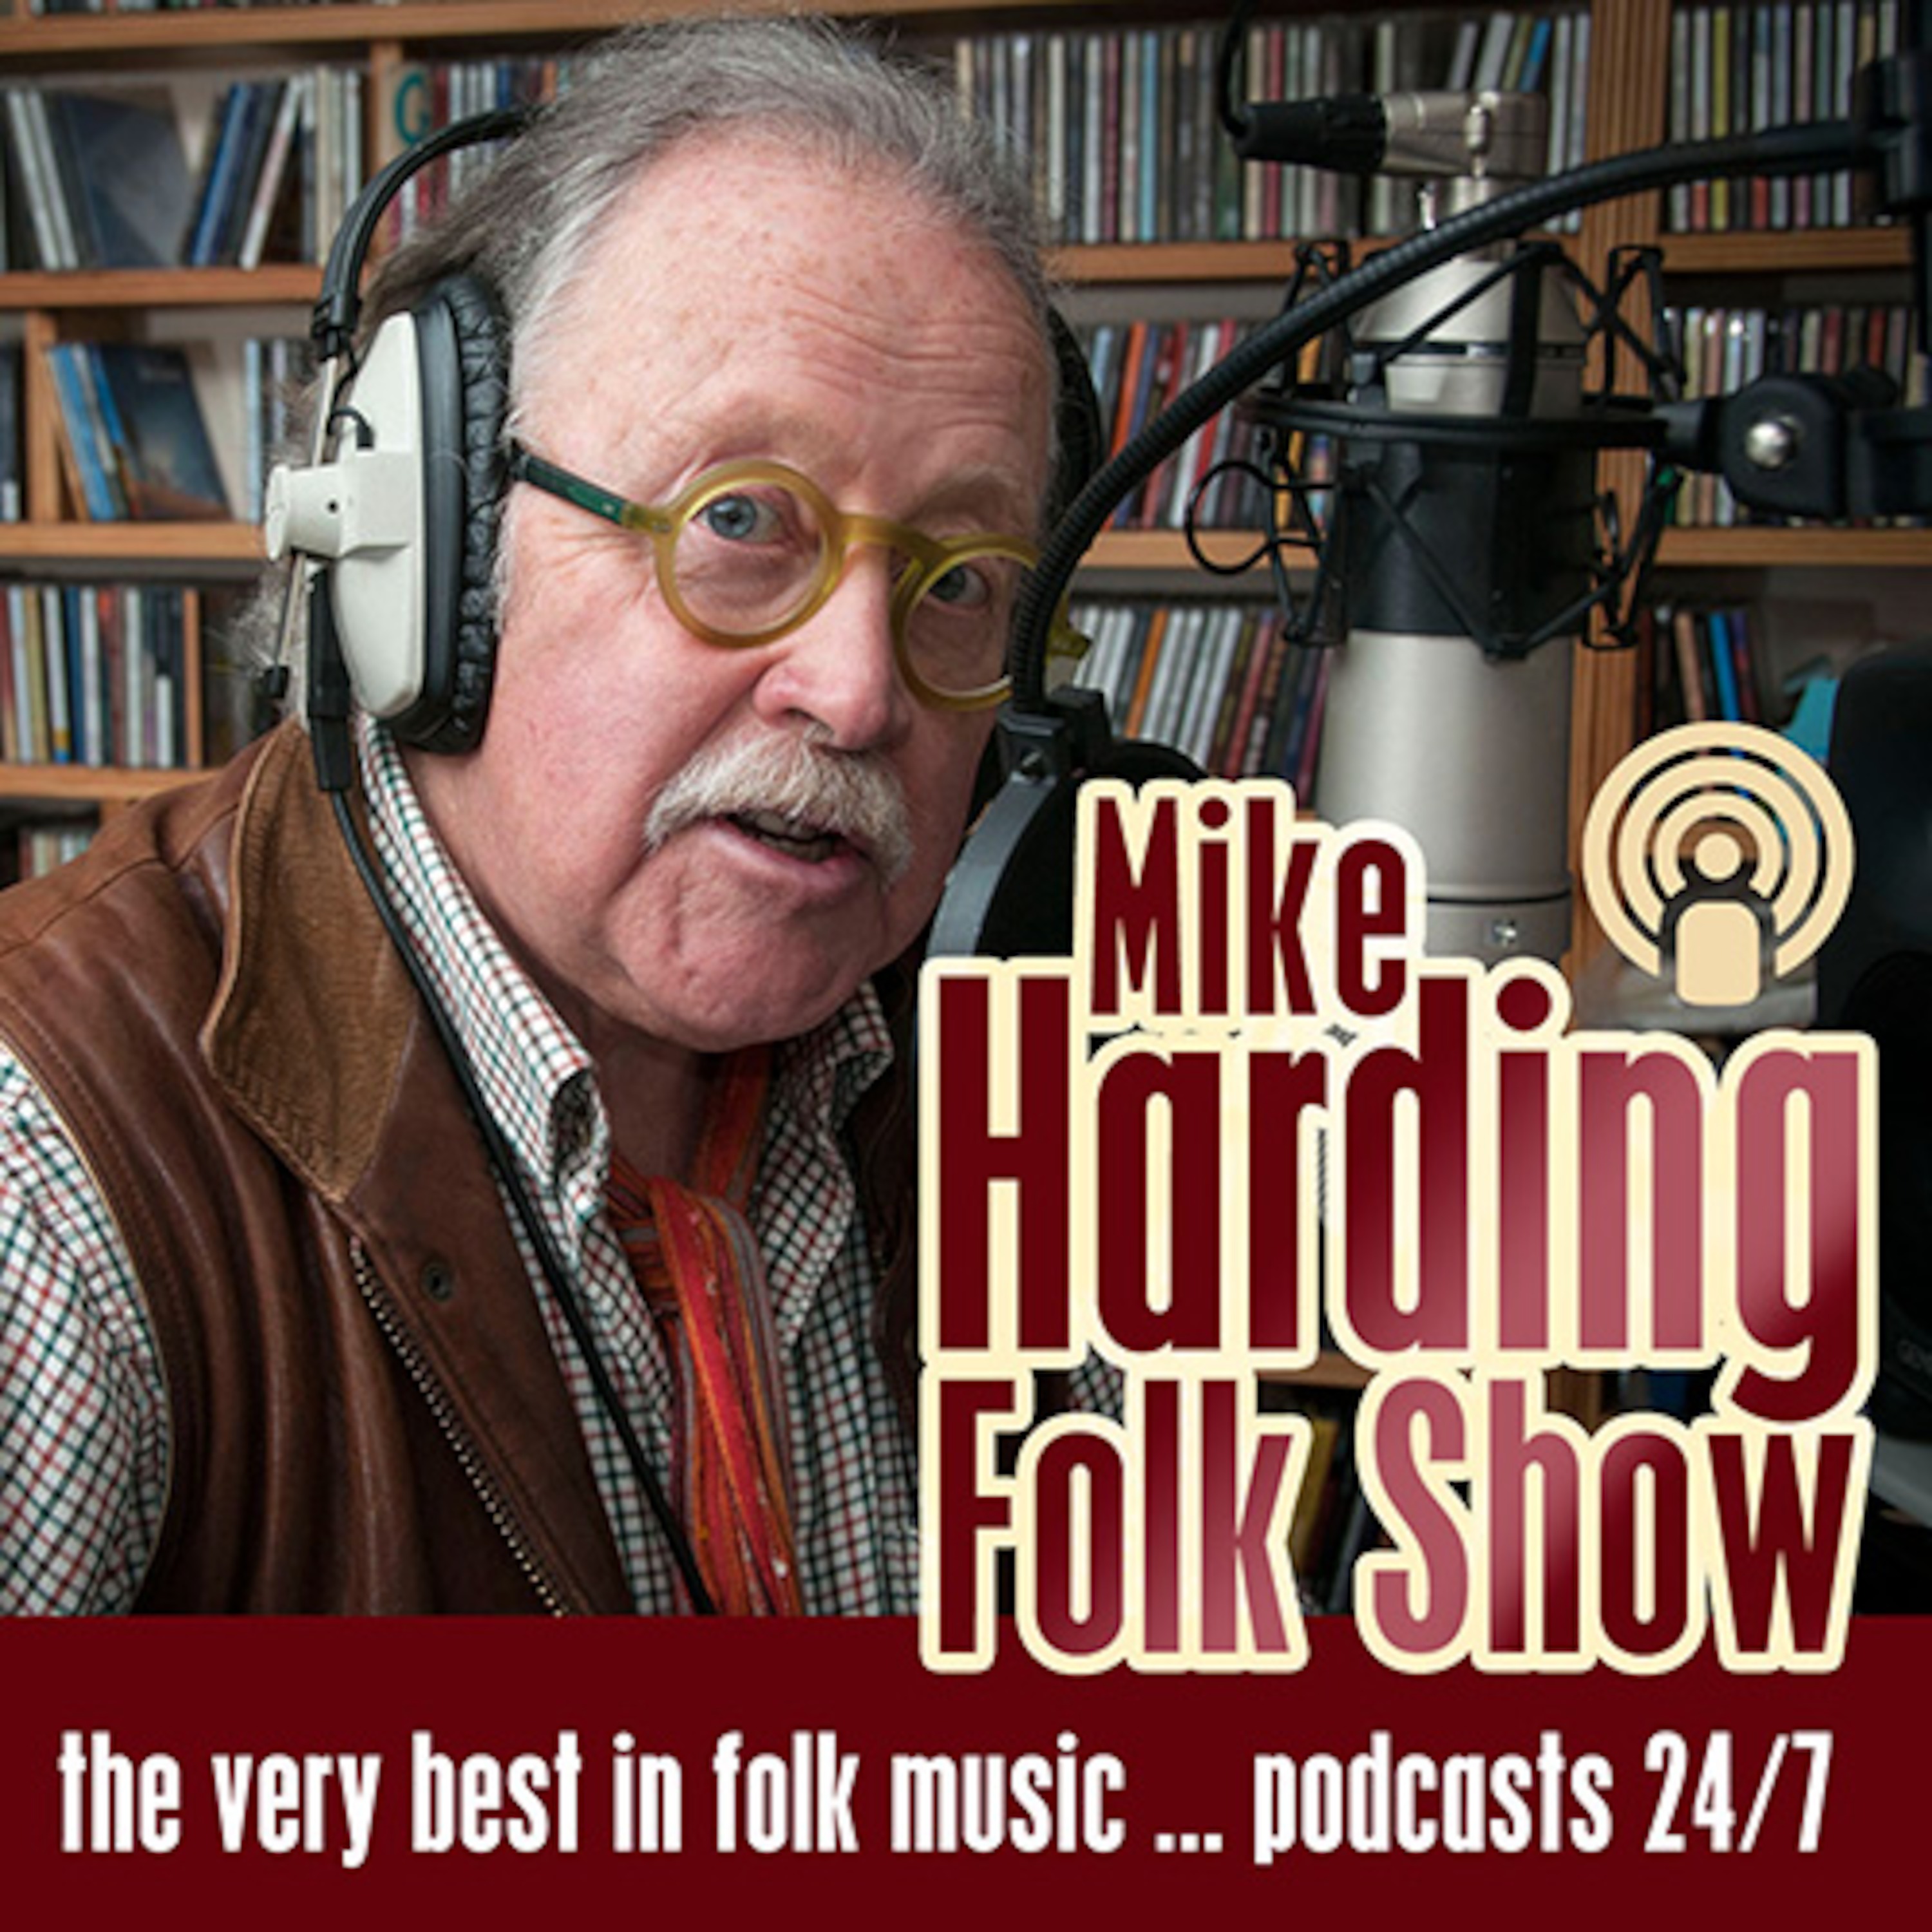 Mike Harding Folk Show 228